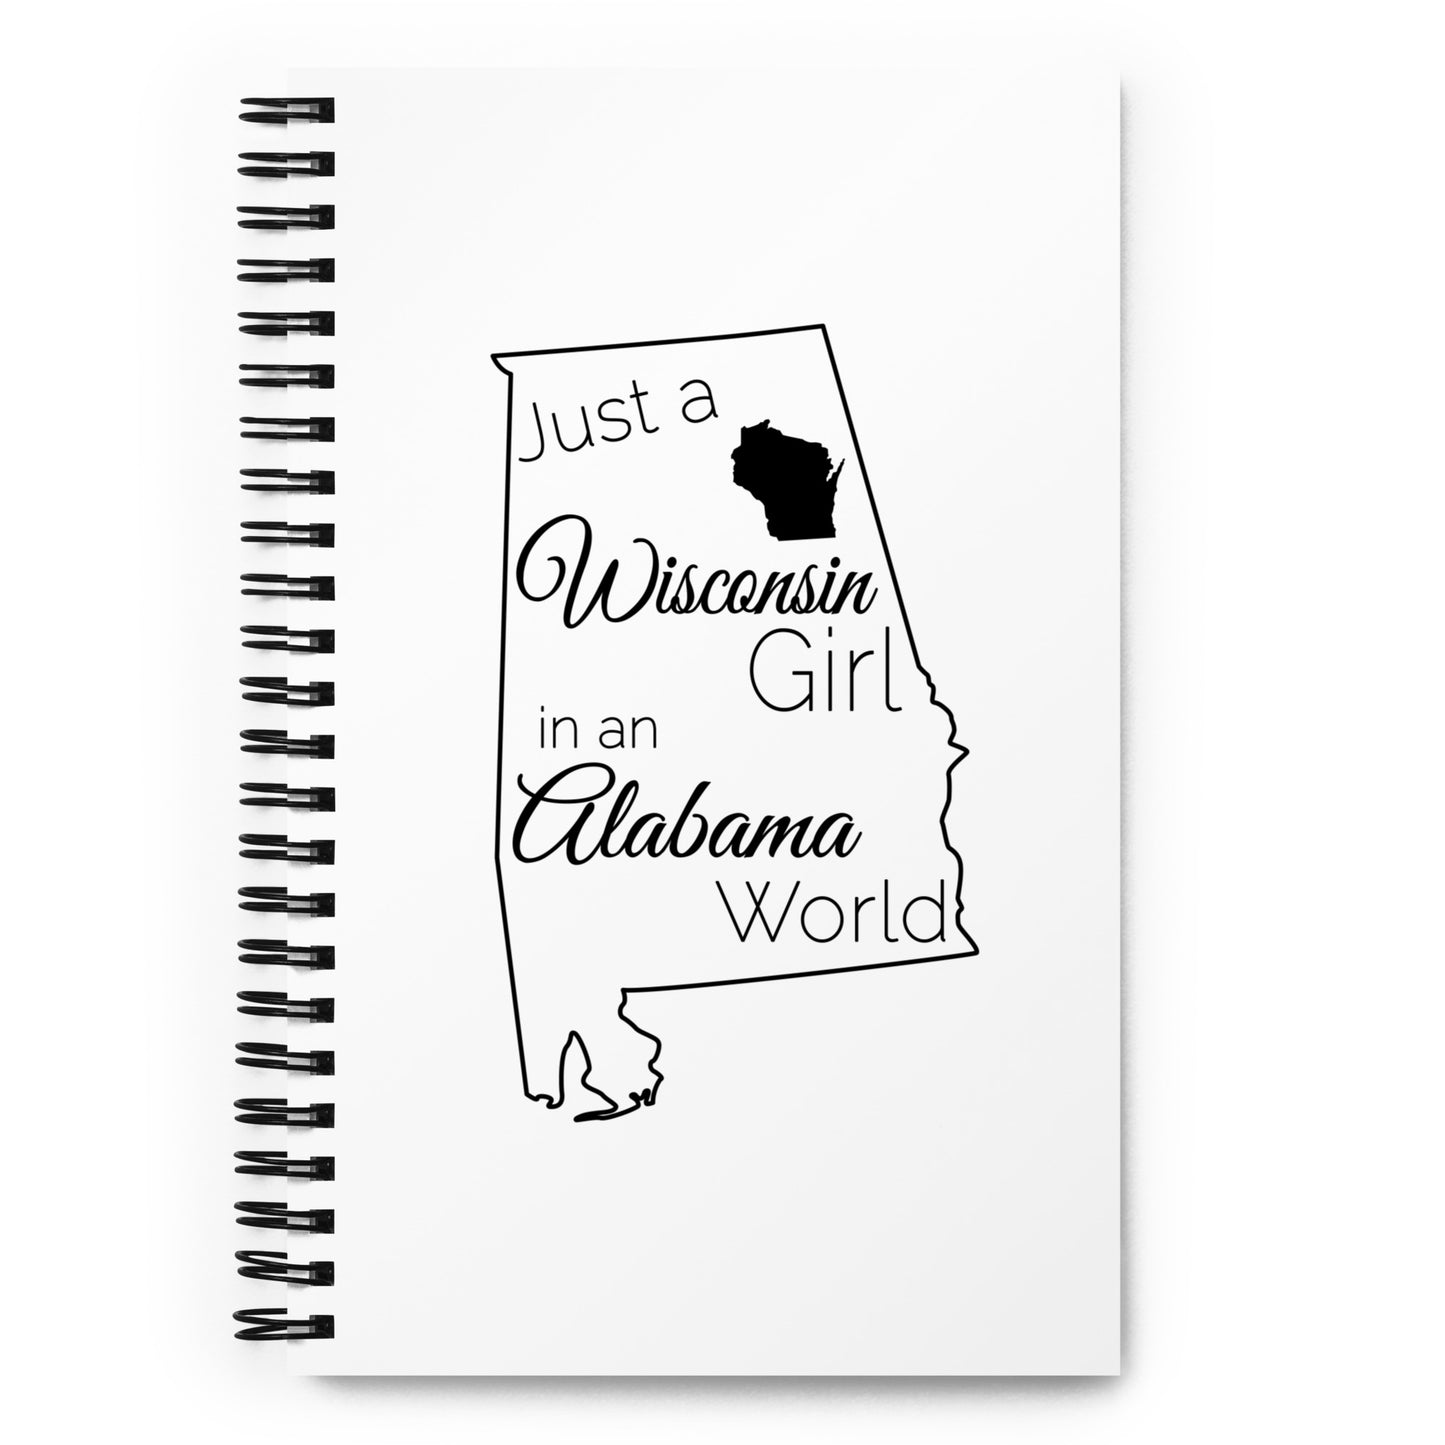 Just a Wisconsin Girl in an Alabama World Spiral notebook